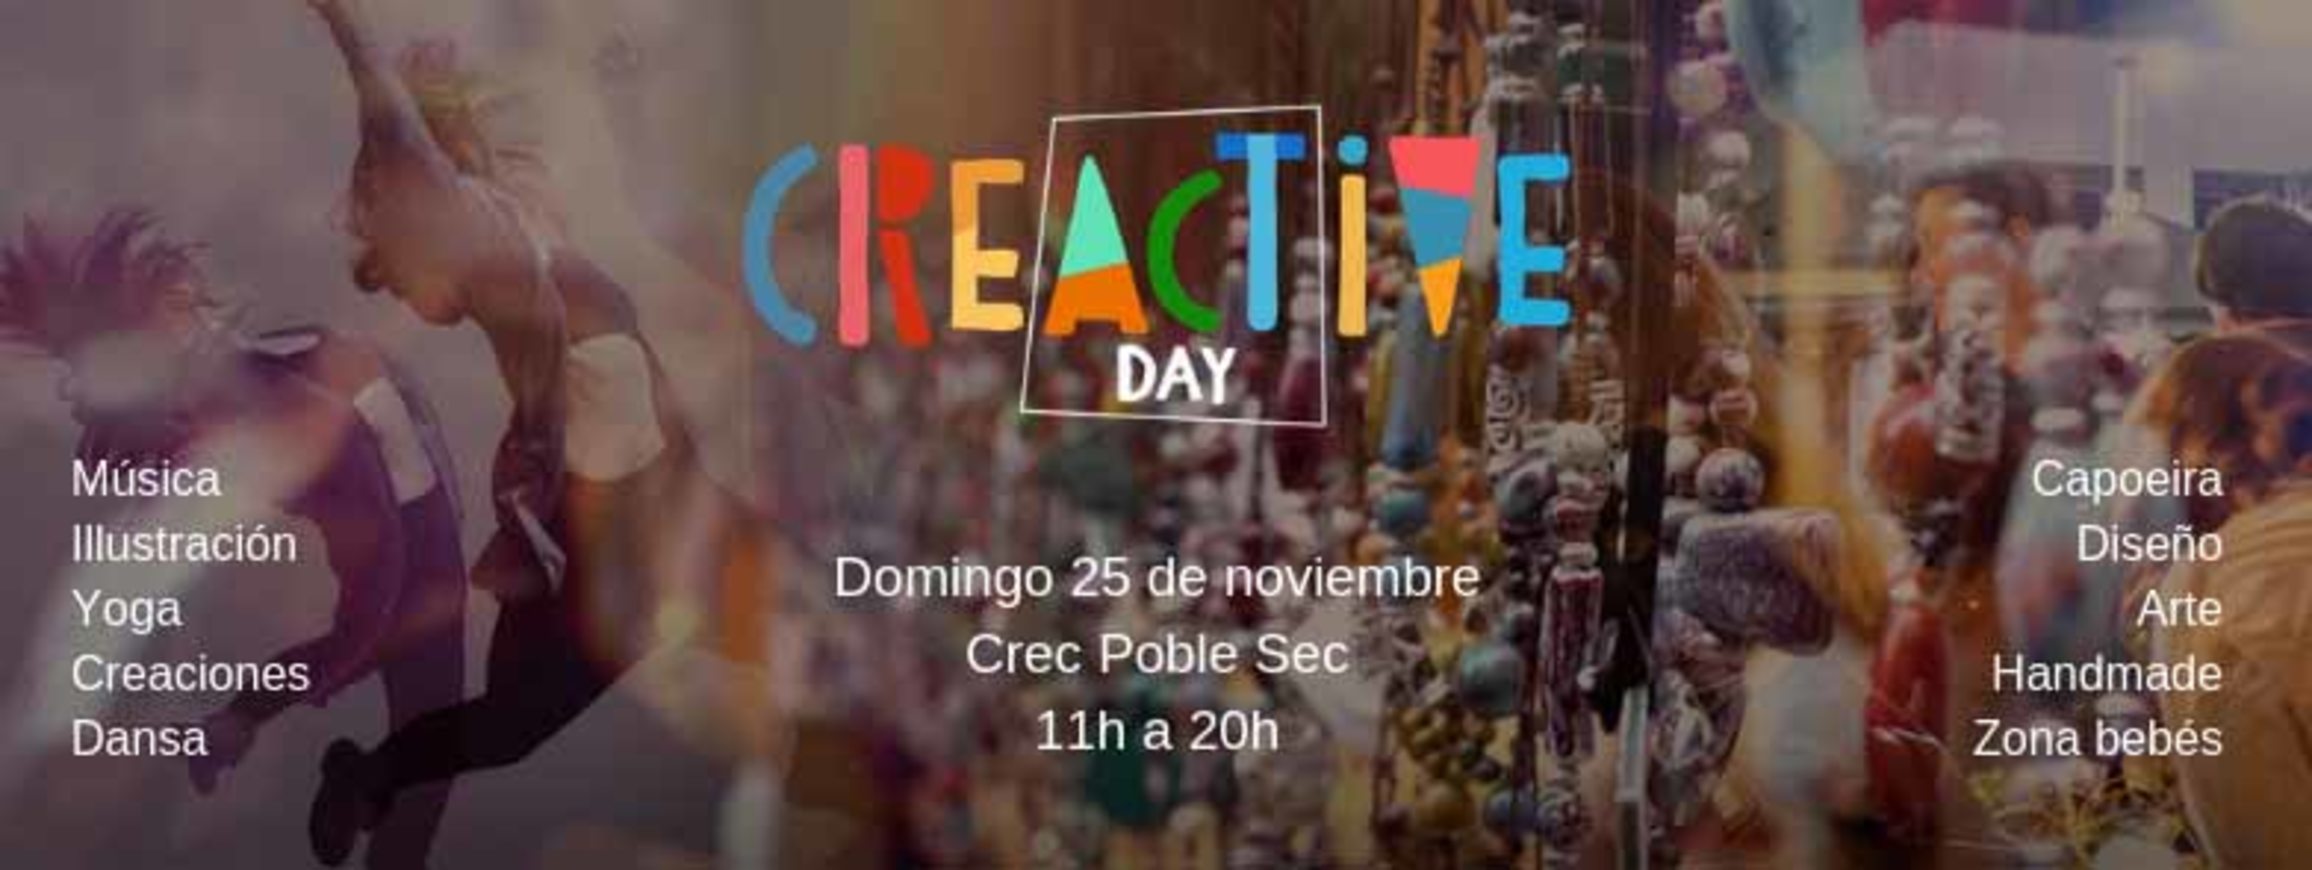 CreACTive Day: mercat creatiu i actiu de tardor  